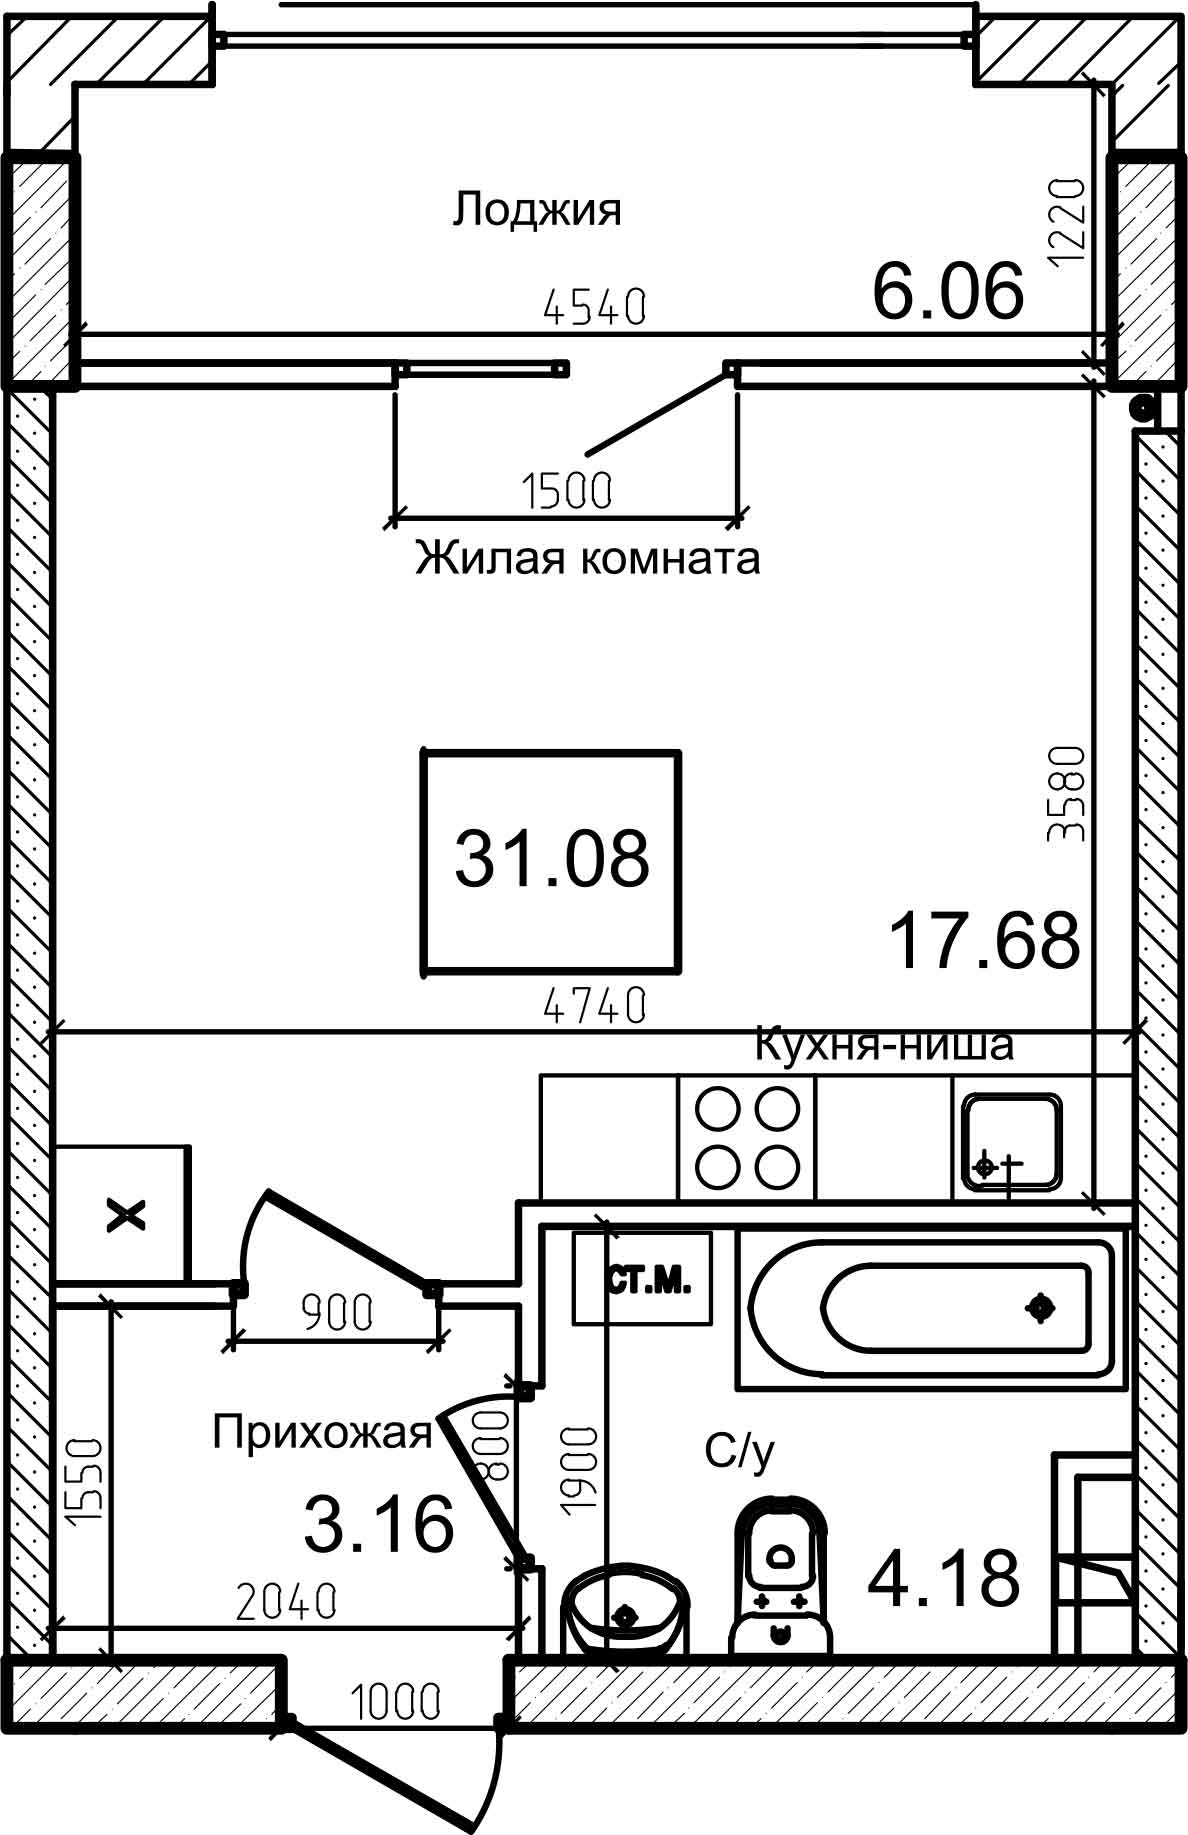 Planning Smart flats area 31.1m2, AB-08-07/00008.